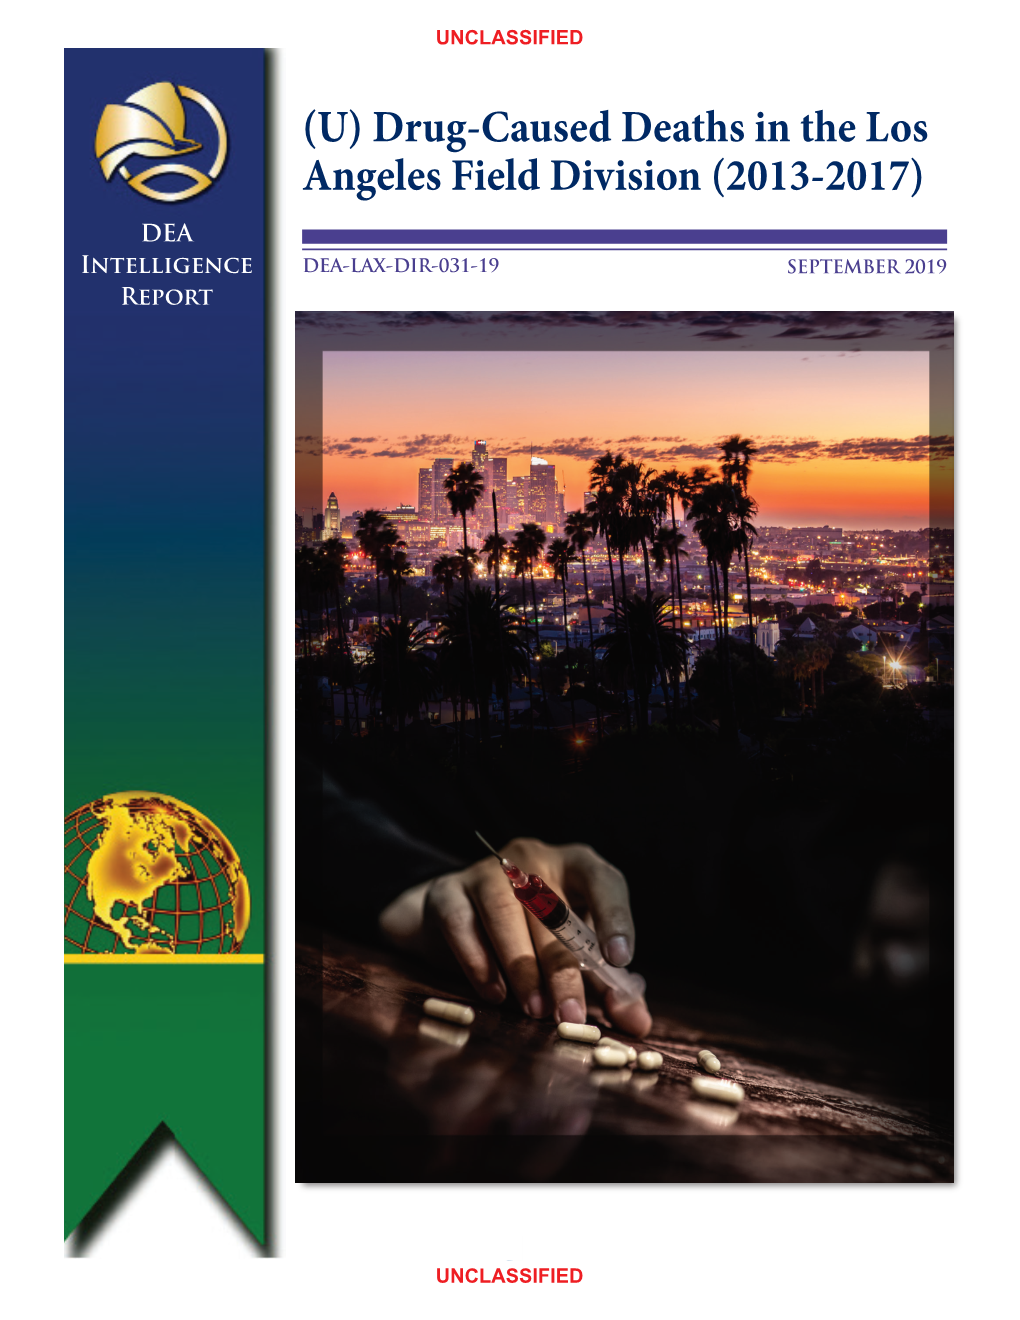 Drug-Caused Deaths in the Los Angeles Field Division (2013-2017) DEADEA Intelligenceintelligence DEA-LAX-DIR-031-19 SEPTEMBER 2019 Reportbrief